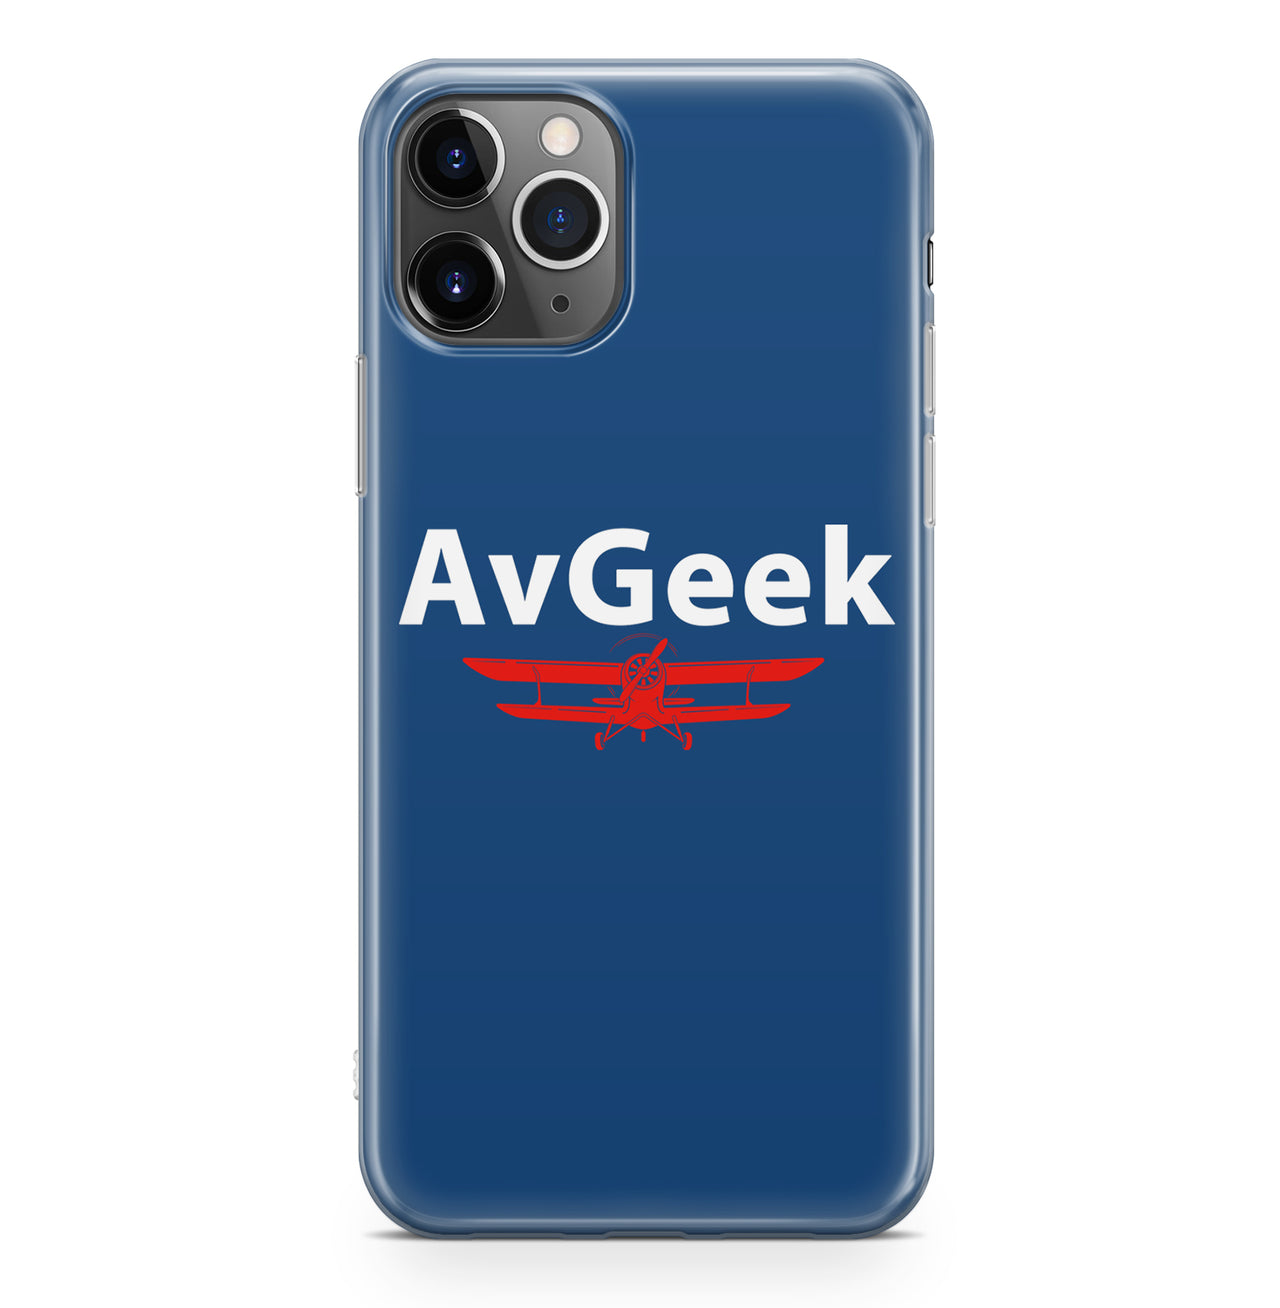 Avgeek Designed iPhone Cases